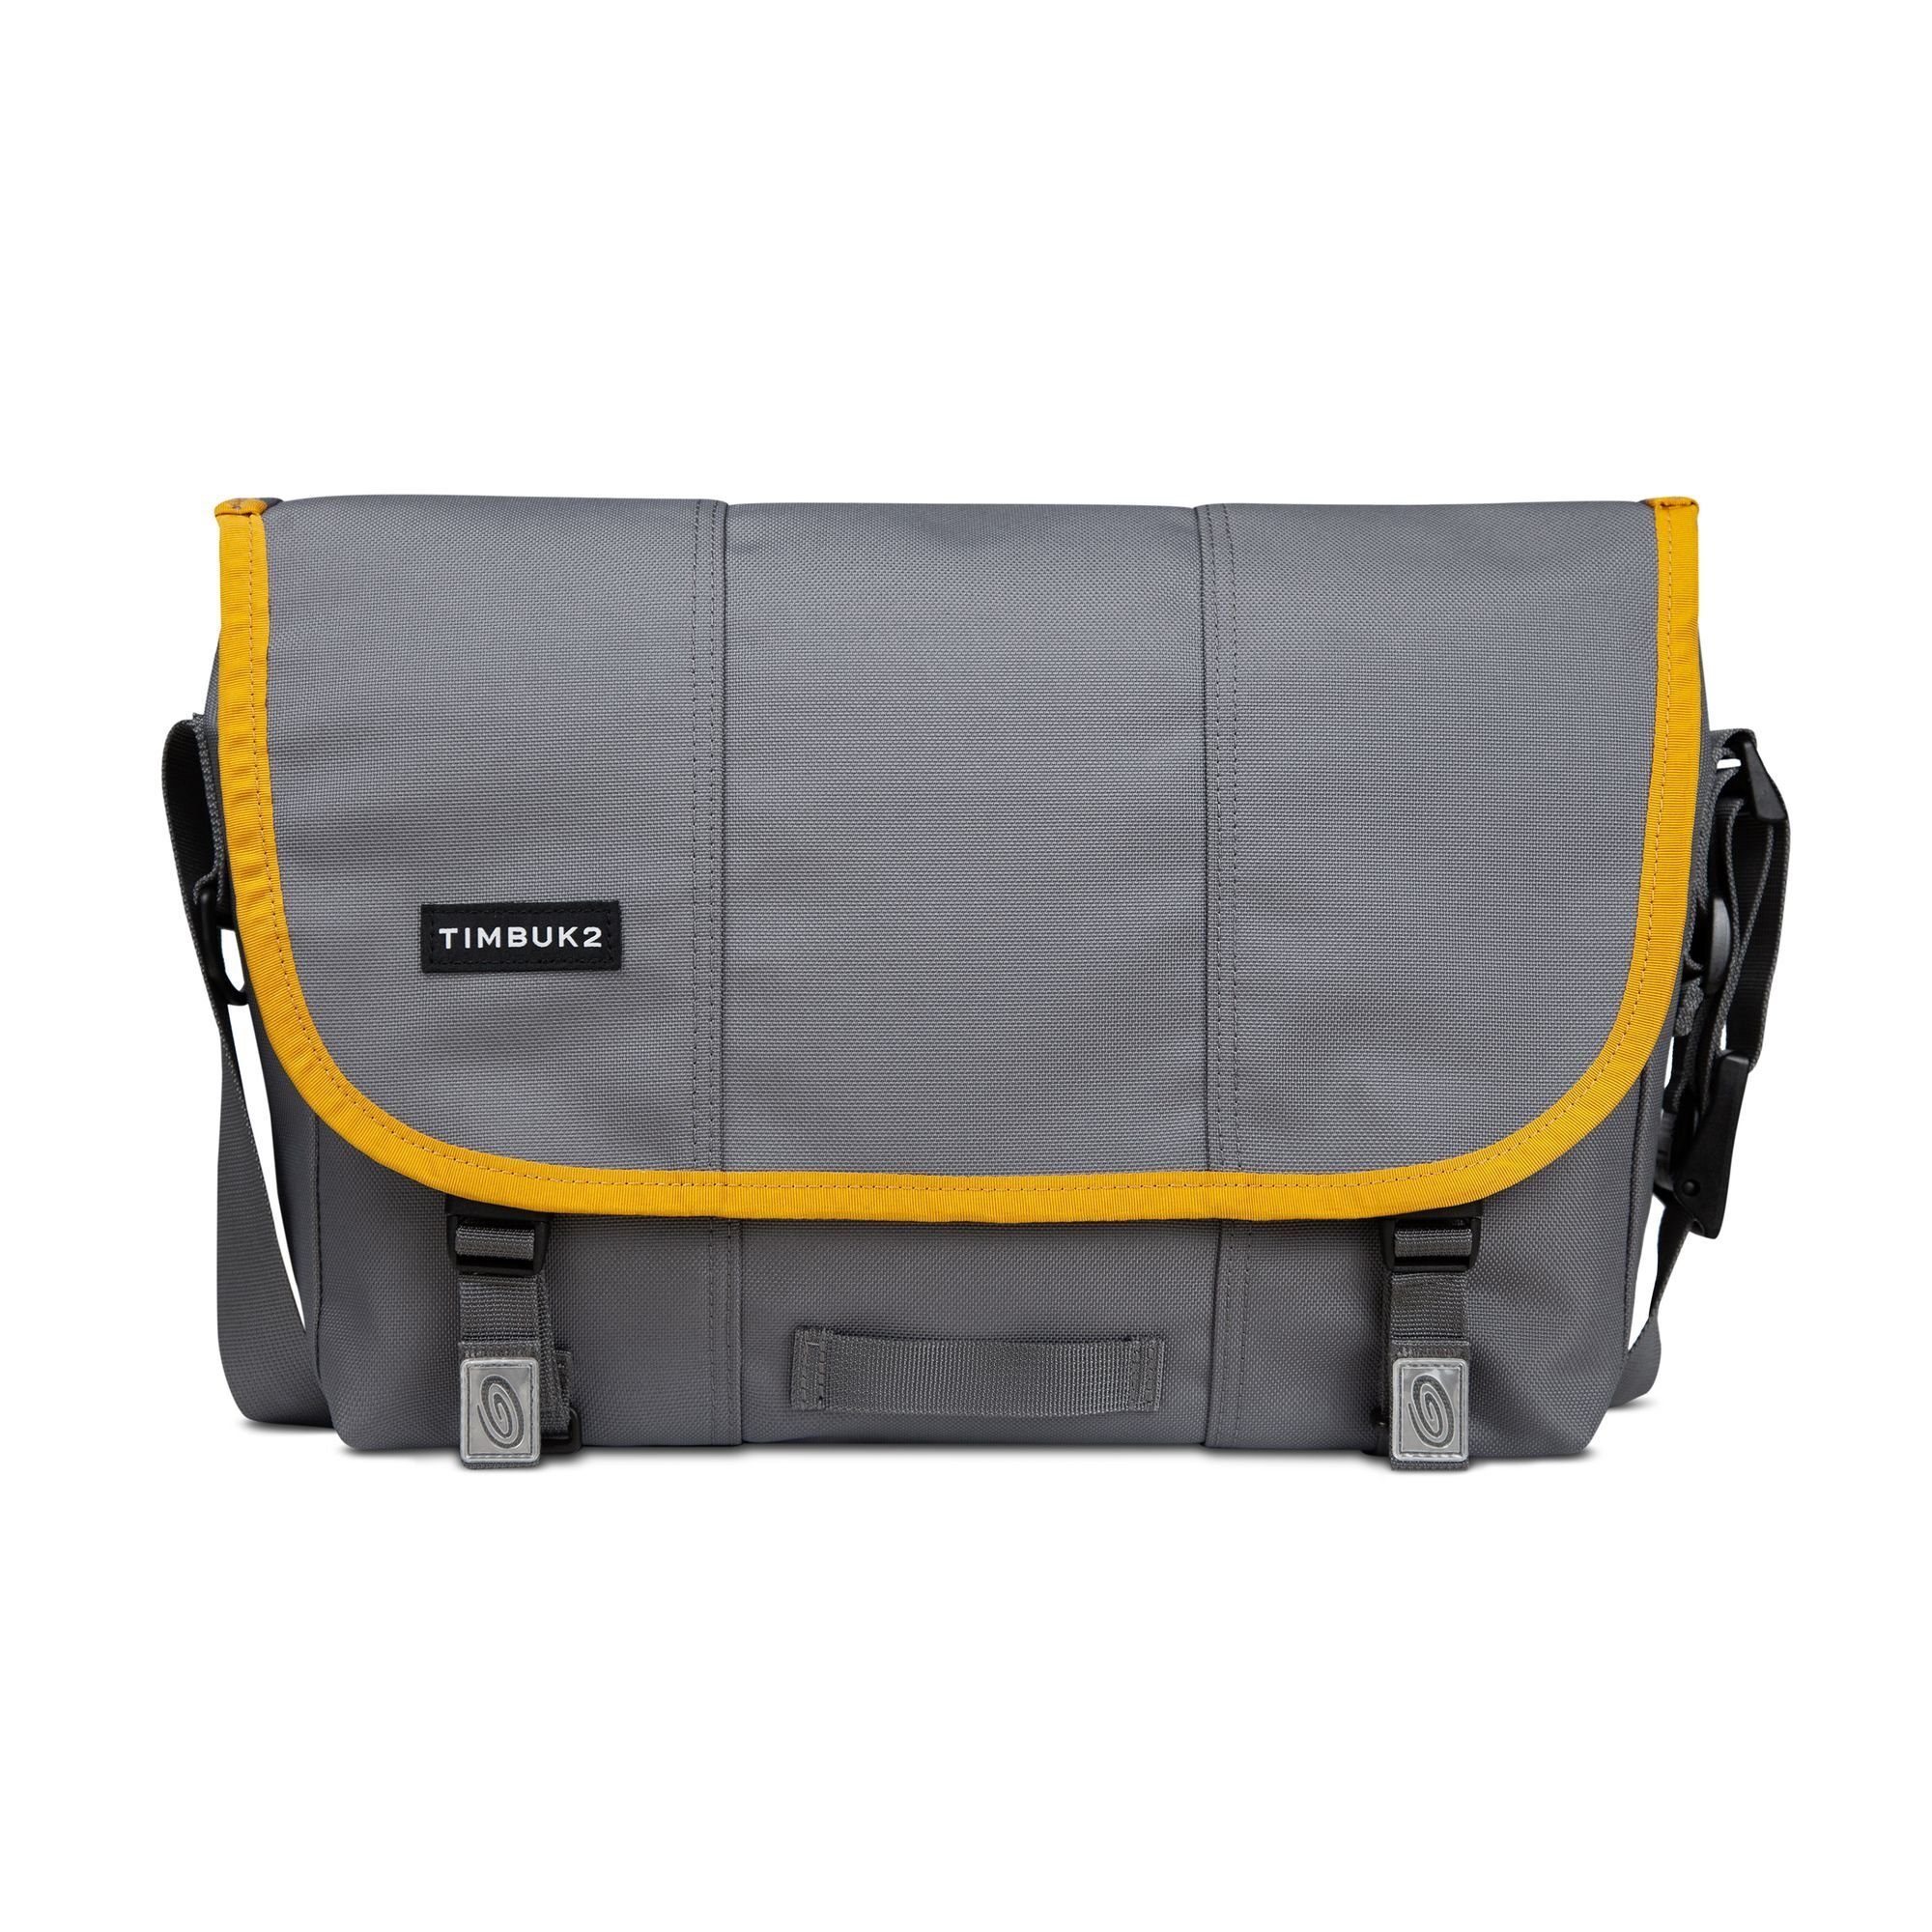 Timbuk2 Messenger Zing Bag Nylon Eco Classic, Gunmetal